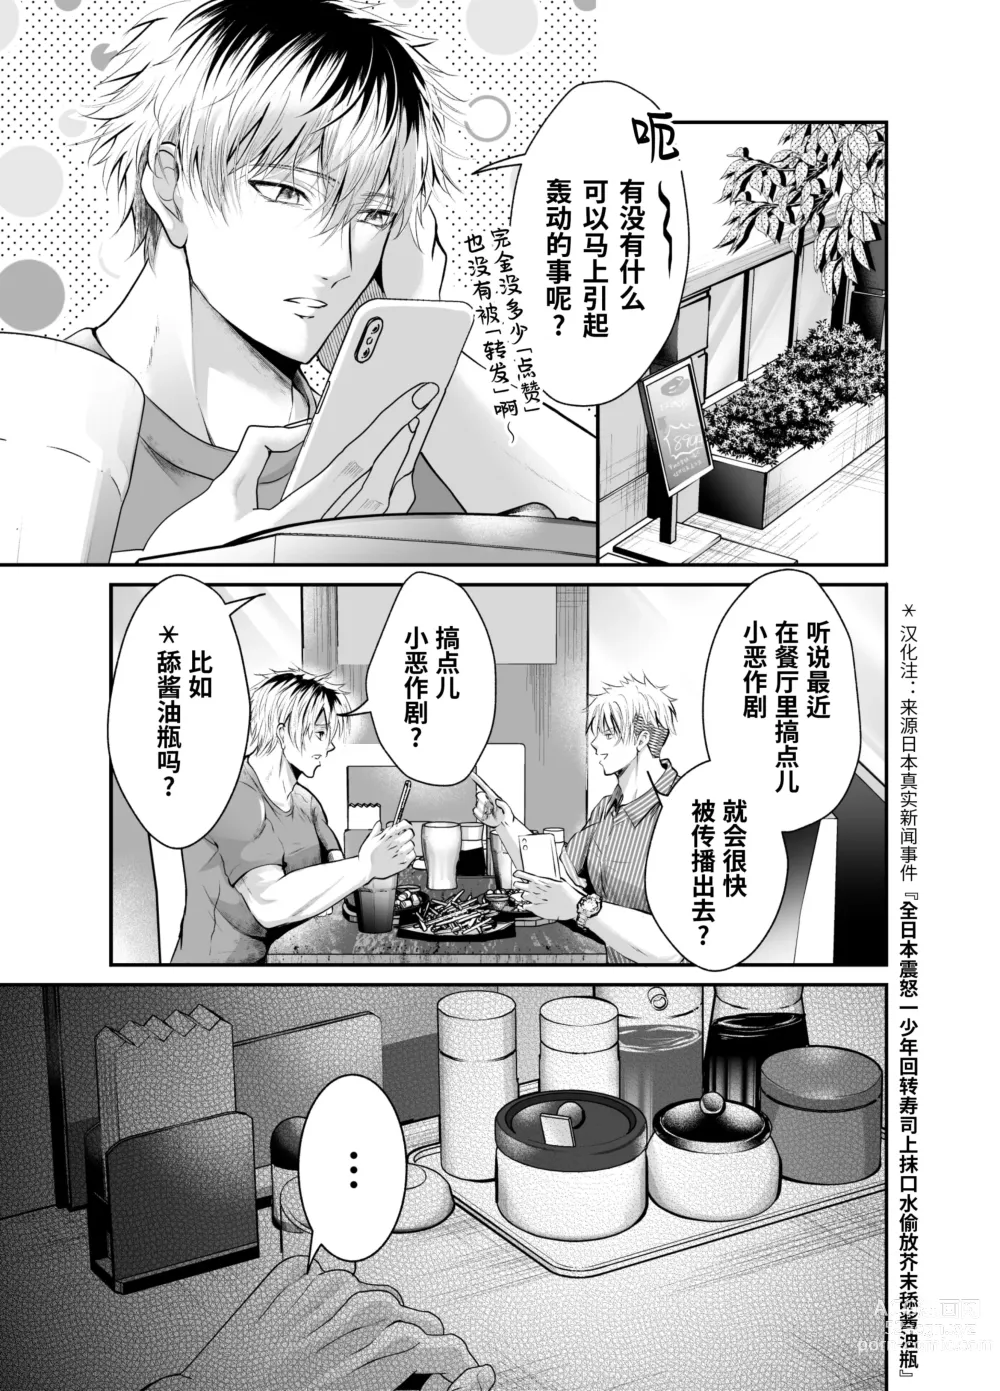 Page 4 of doujinshi 餐厅乱舔事件的加害者沦陷雌堕导致人生终结 (decensored)